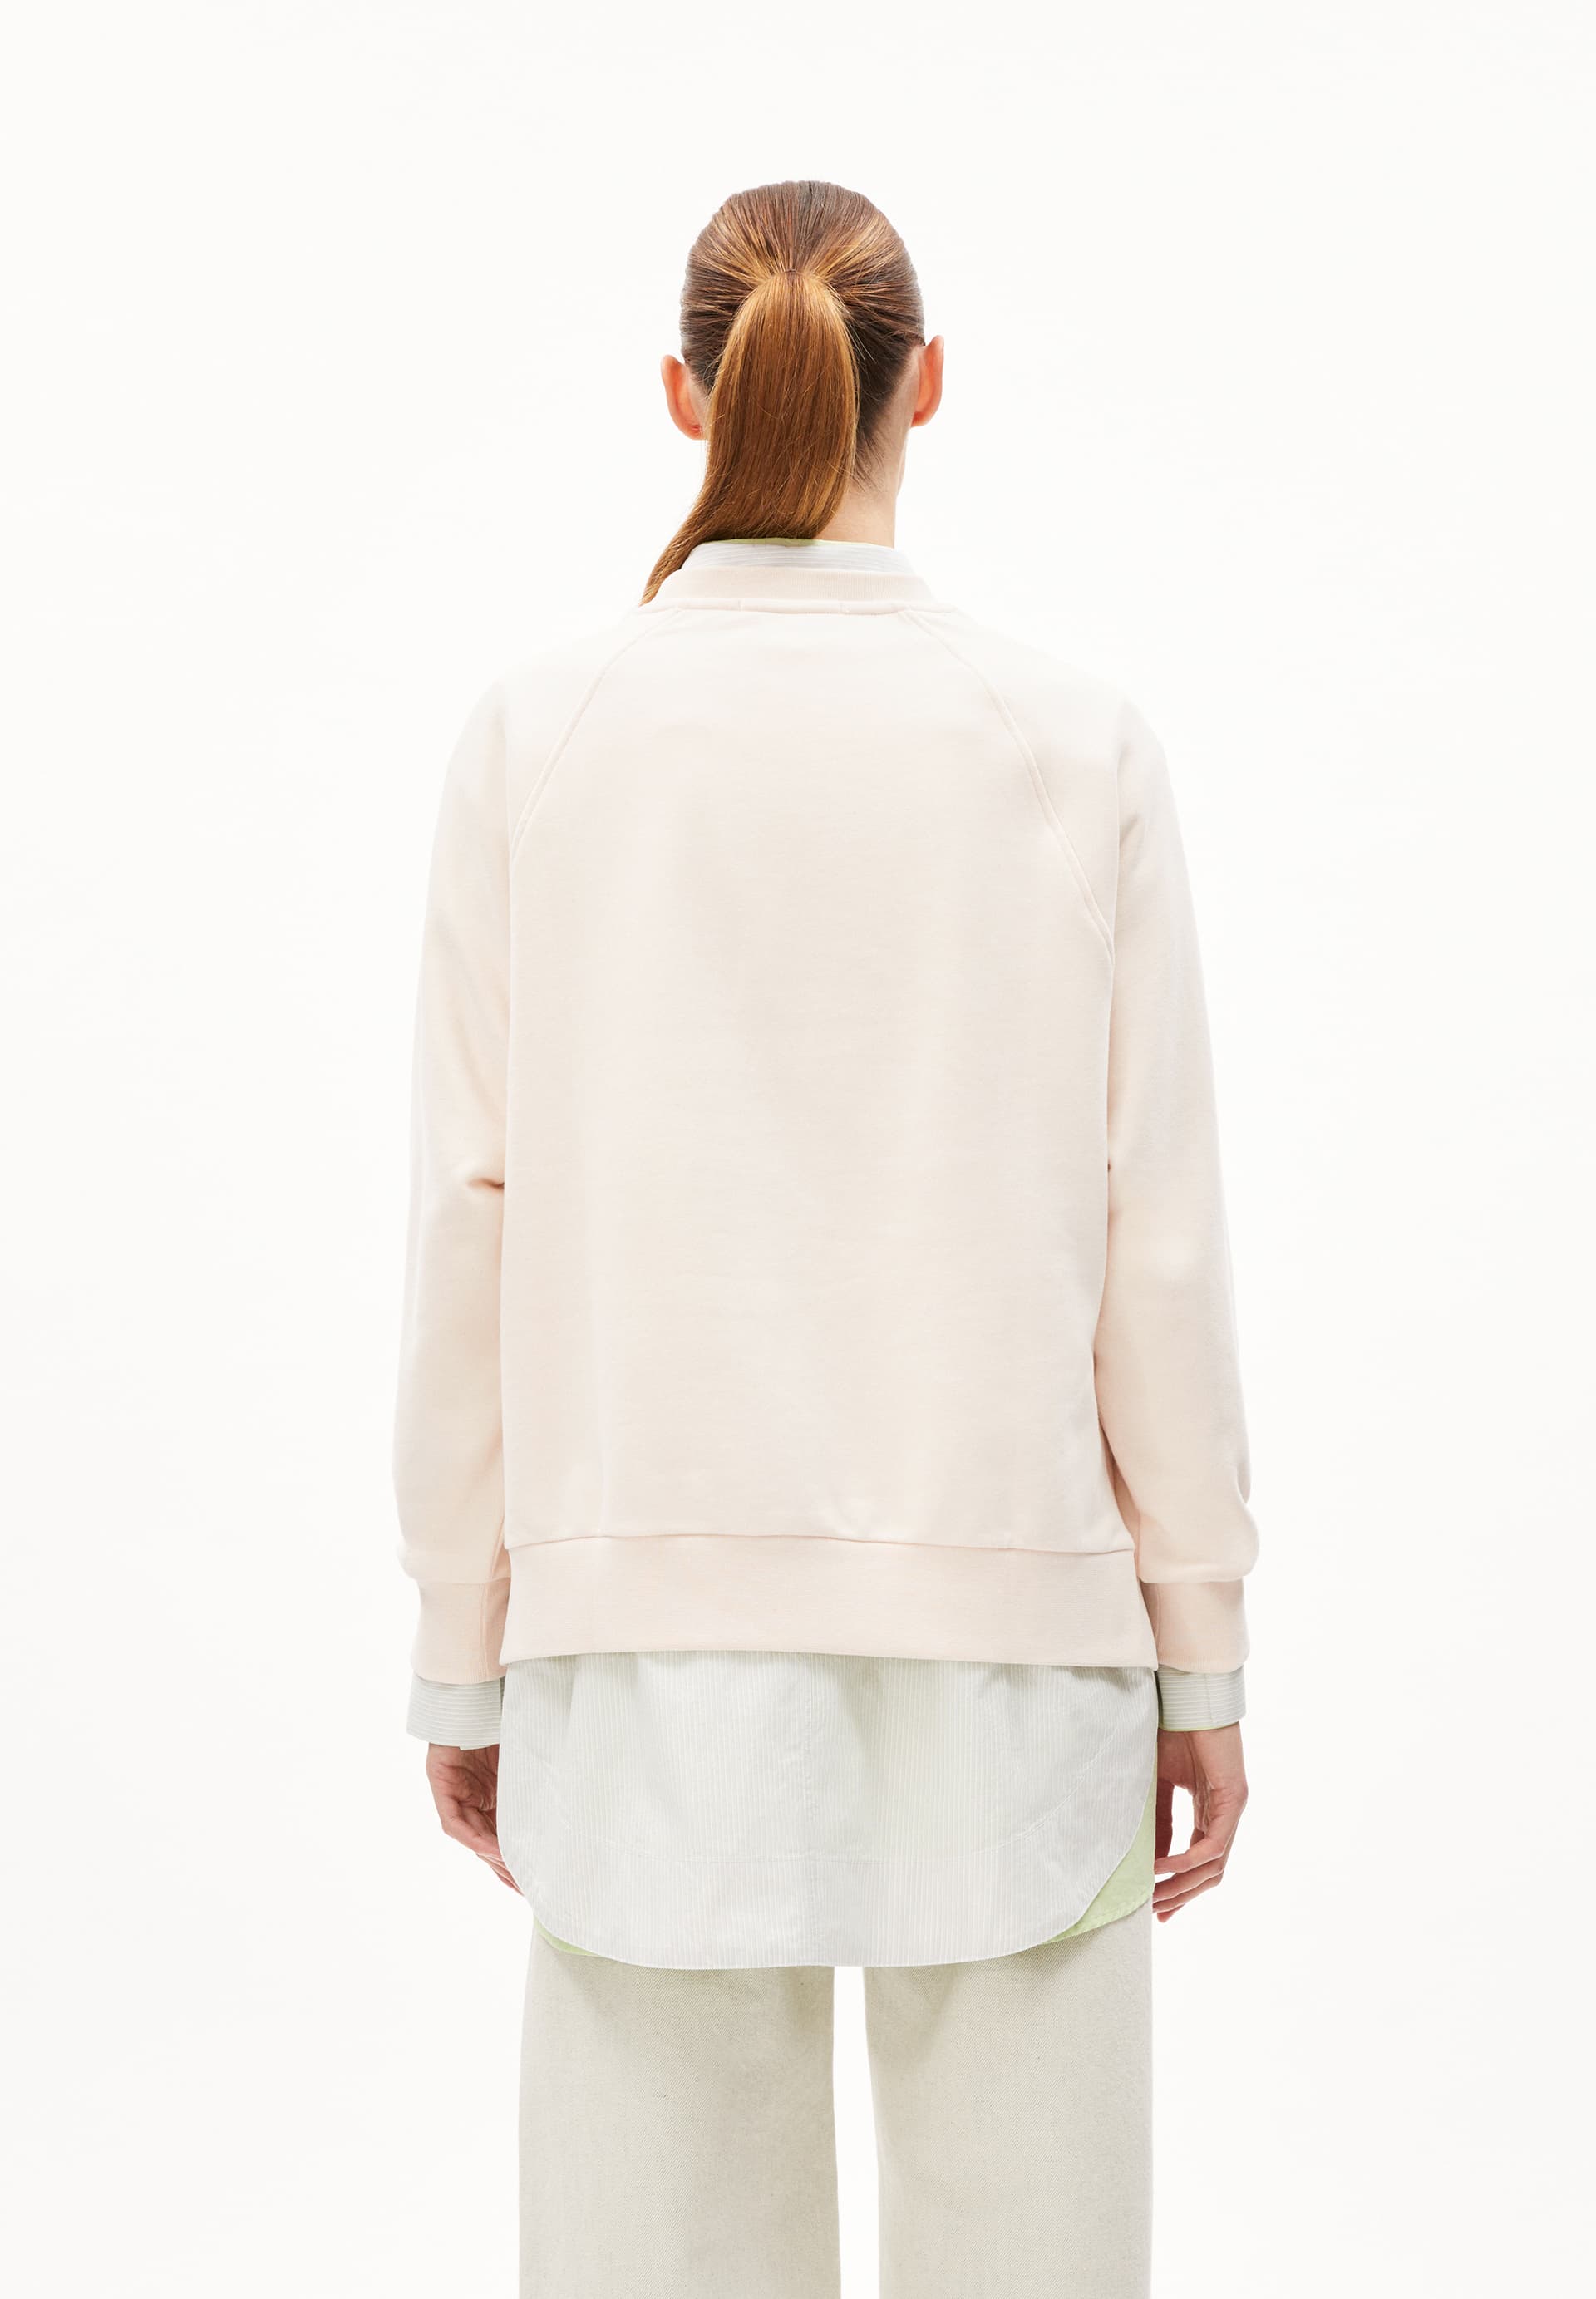 GIOVANNAA Sweatshirt Loose Fit made of Organic Cotton